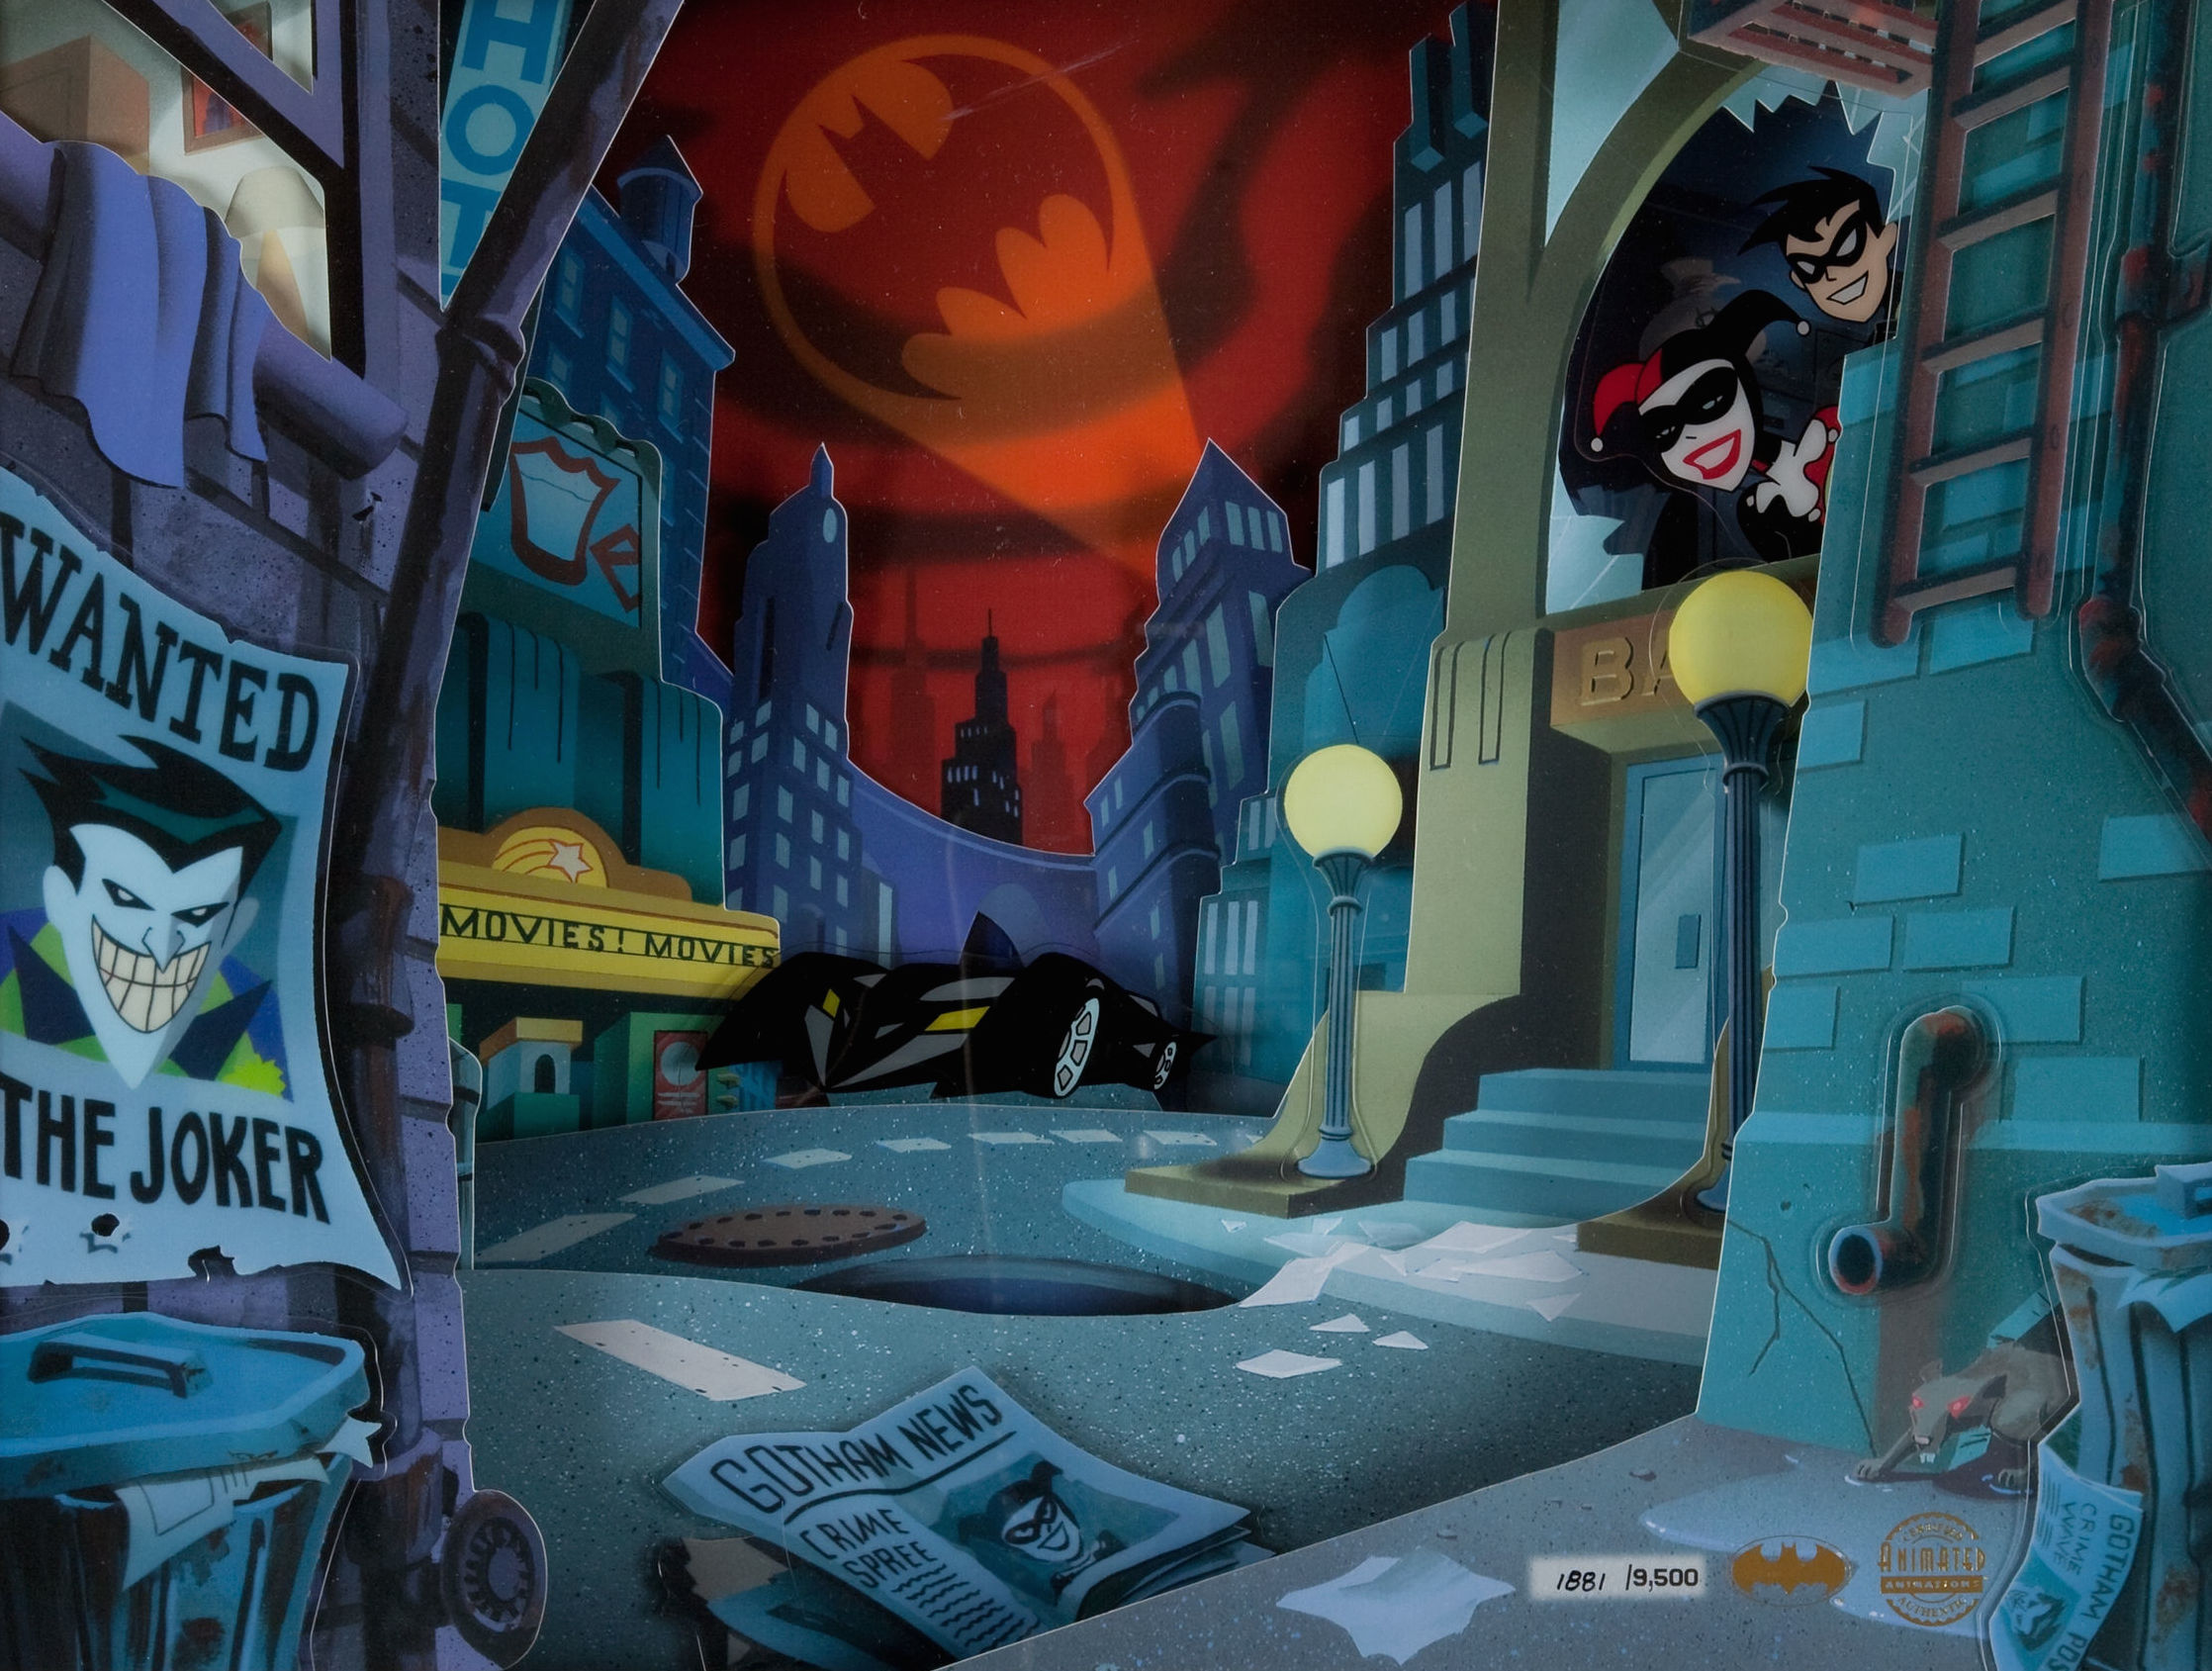 Скачать обои бесплатно Комиксы, Бэтмен картинка на рабочий стол ПК